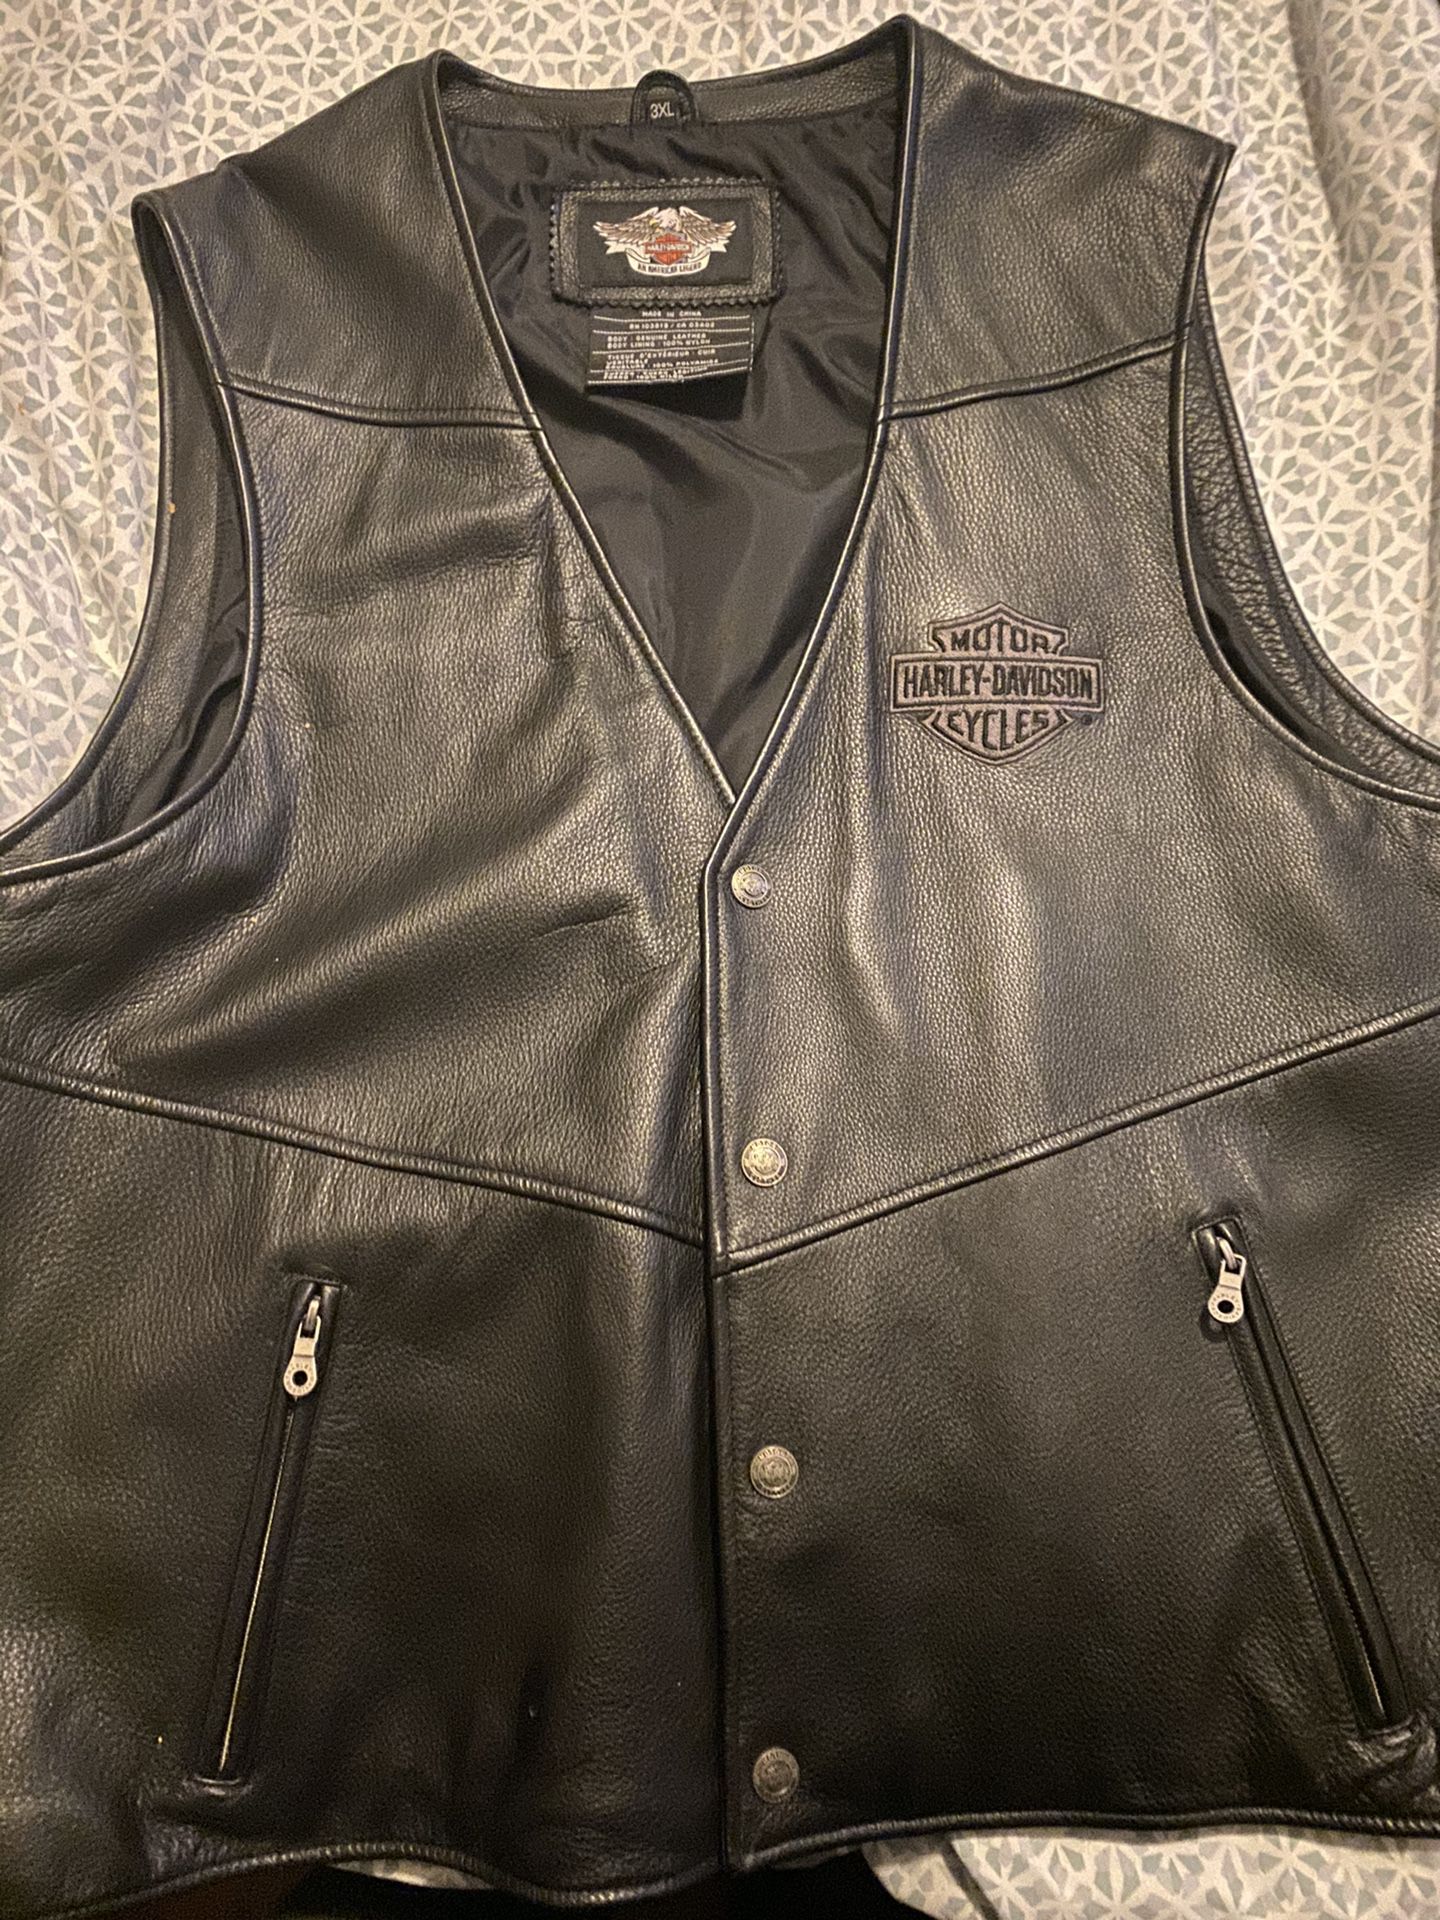 Harley Davidson Leather Vest 3XL New